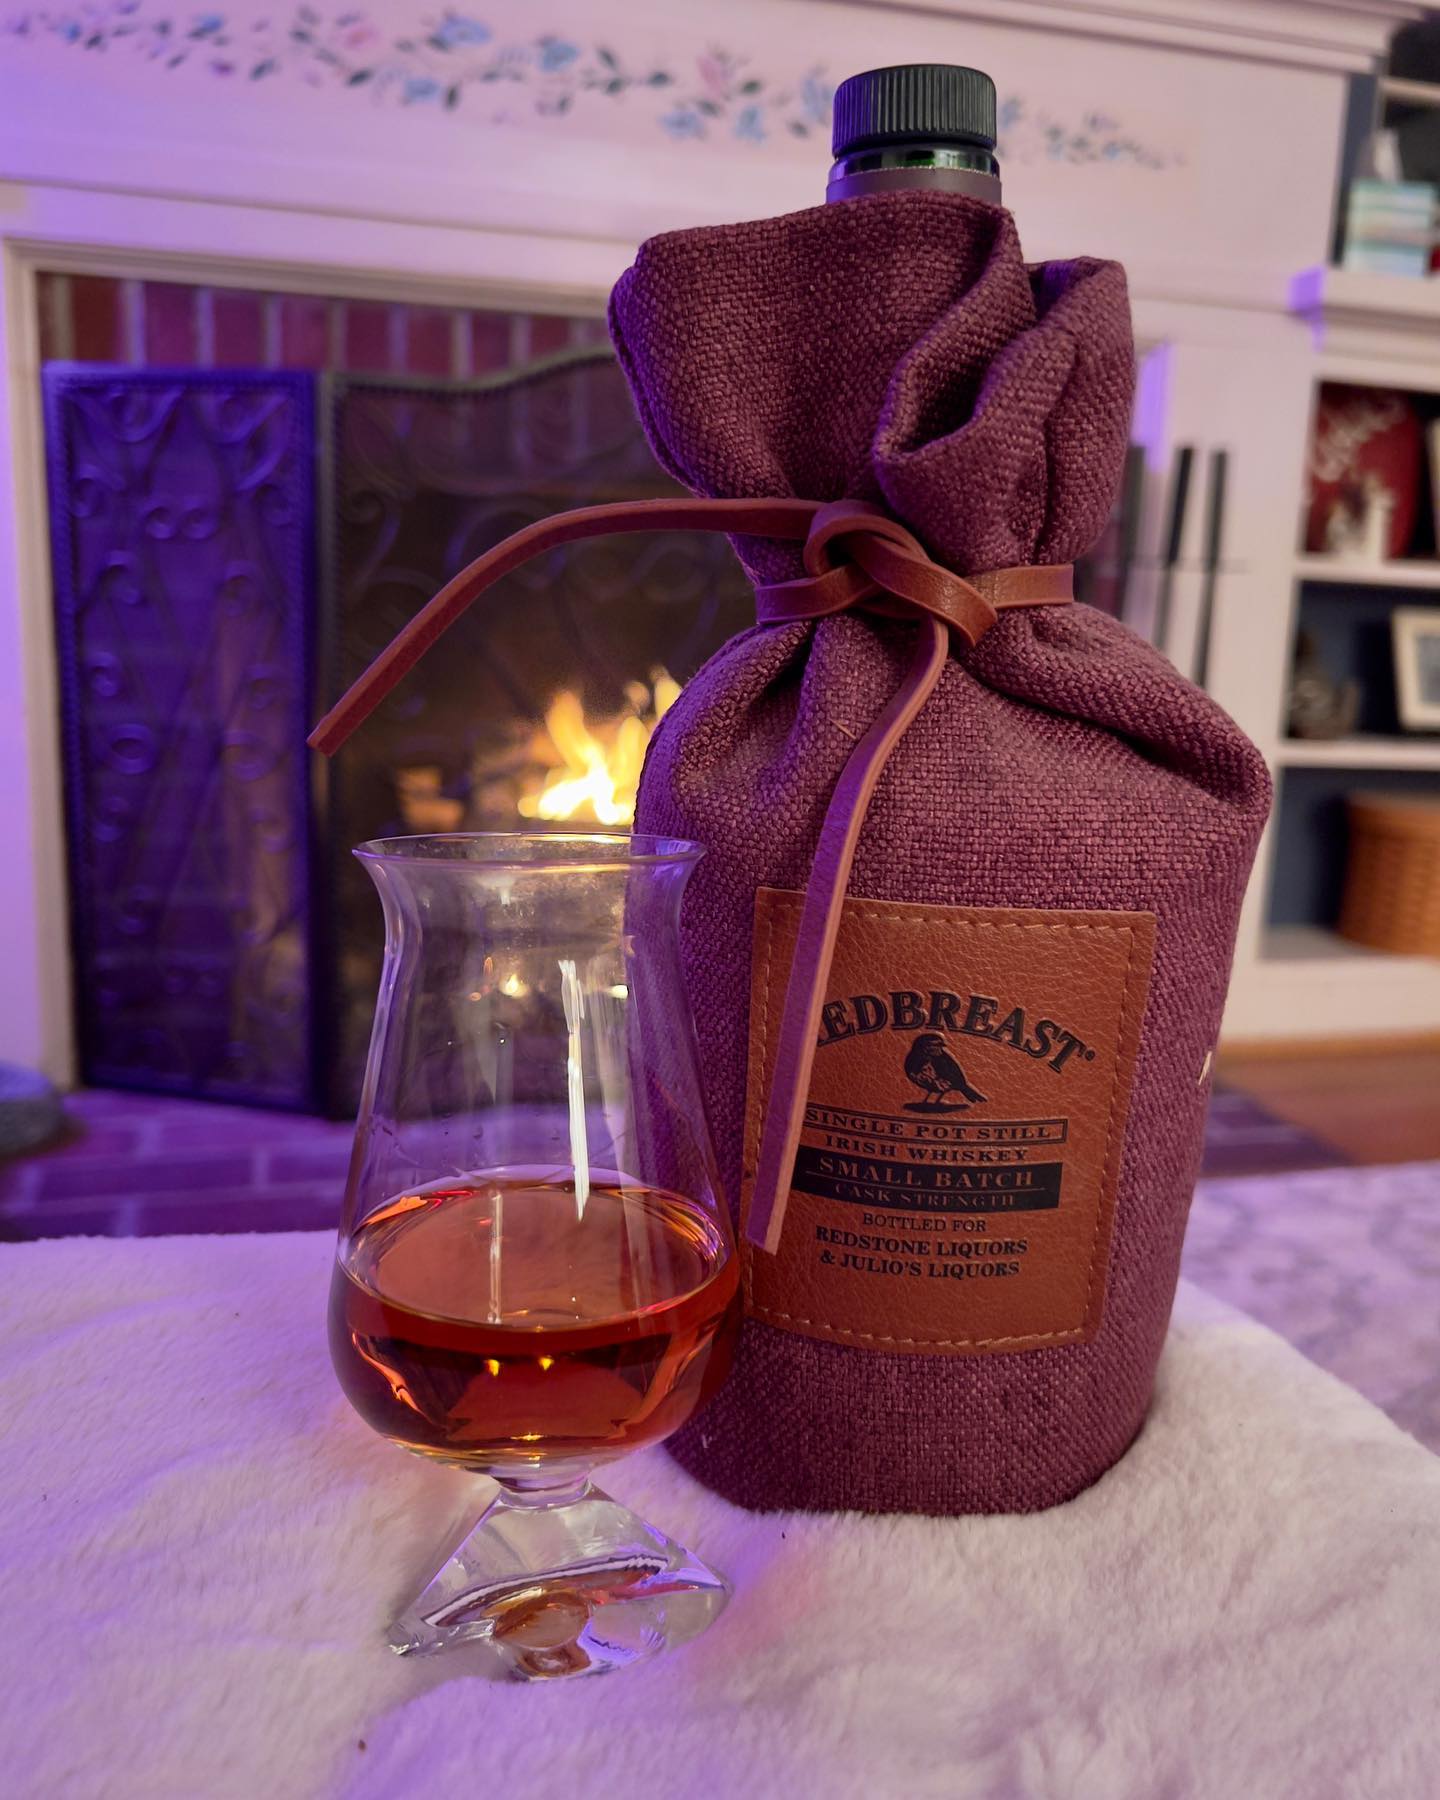 New year, same classic @redbreastirishwhiskey Small Batch by the fire! #SaturdayNightSip #WhiskyCastSponsor